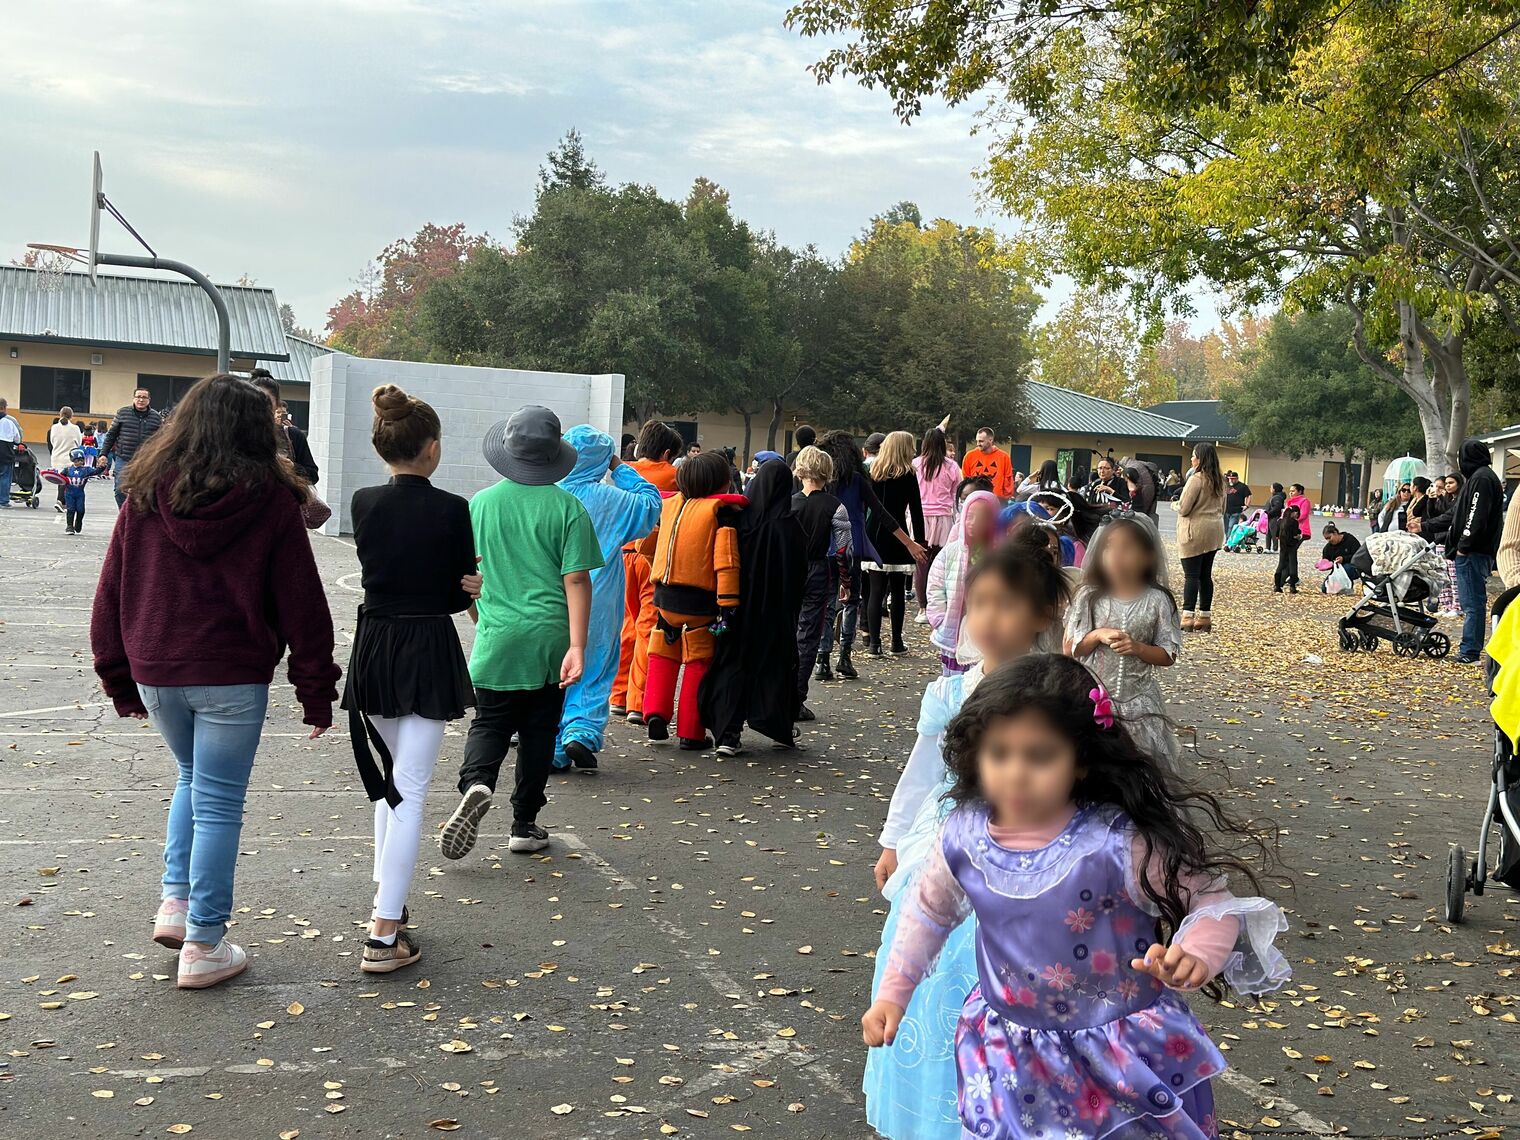 Children in costume walking on a playground